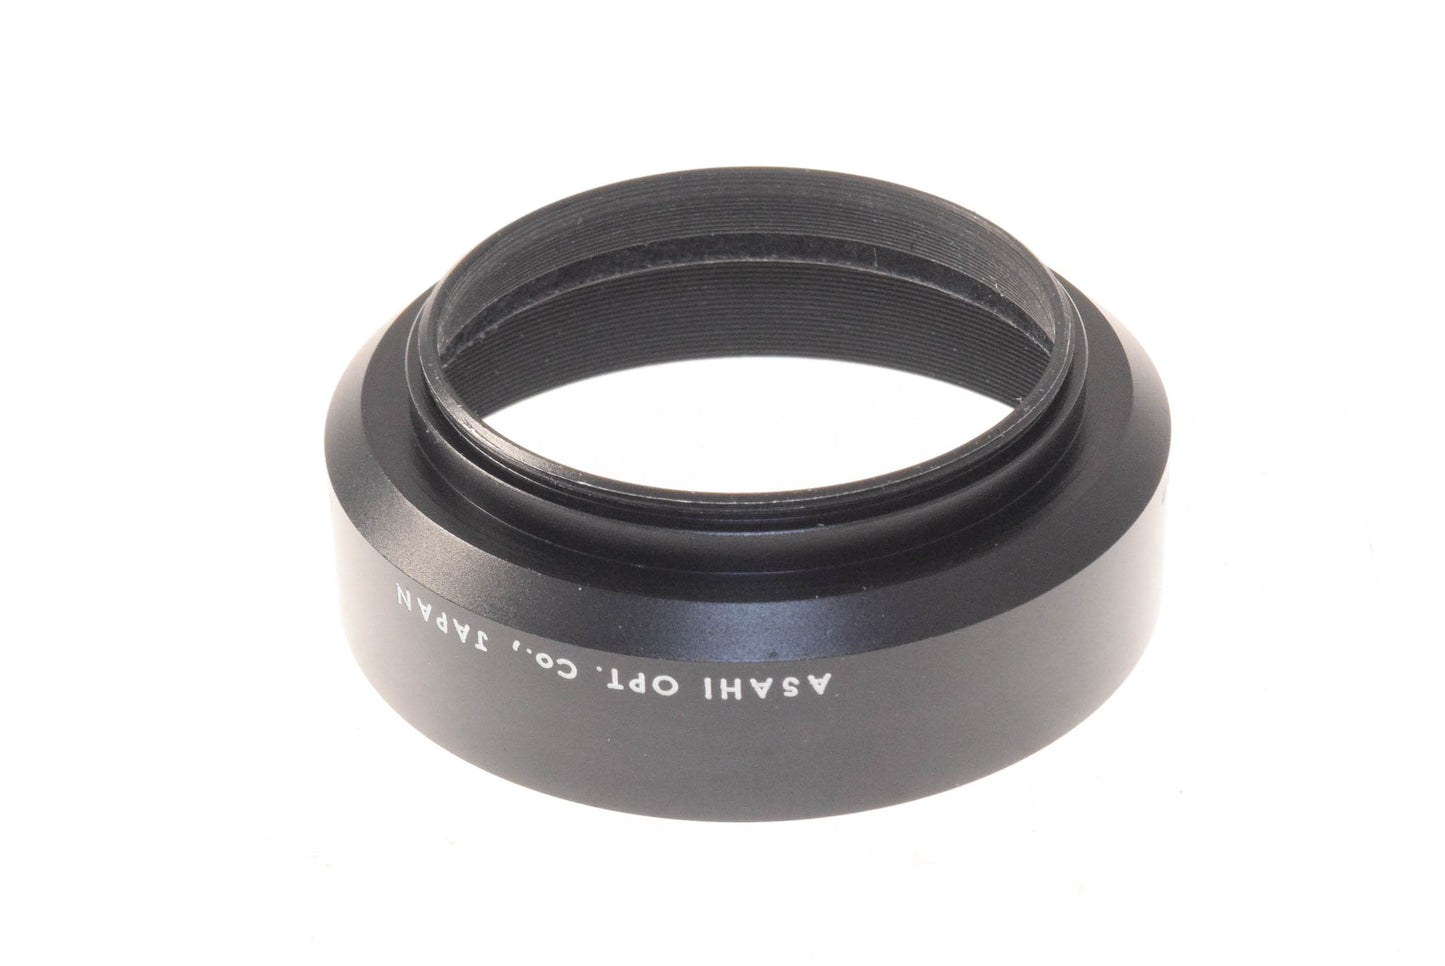 Pentax 49mm Lens Hood For 50mm f1.4 & 55mm f1.8-2